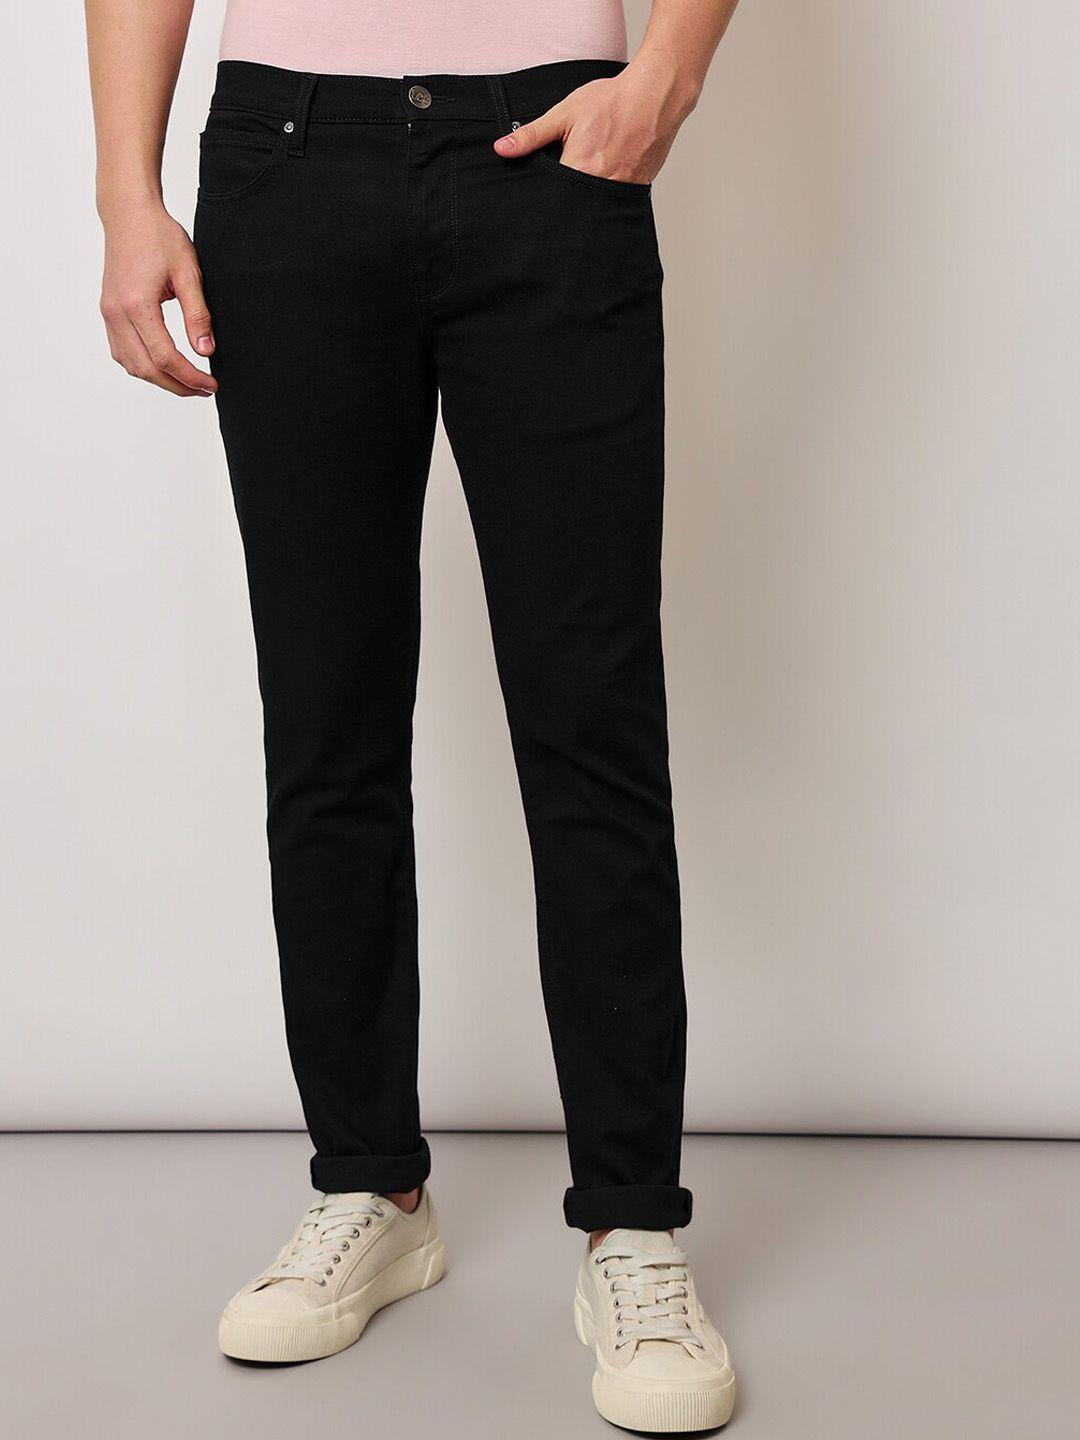 lee-men-clean-look-stretchable-cotton-jeans